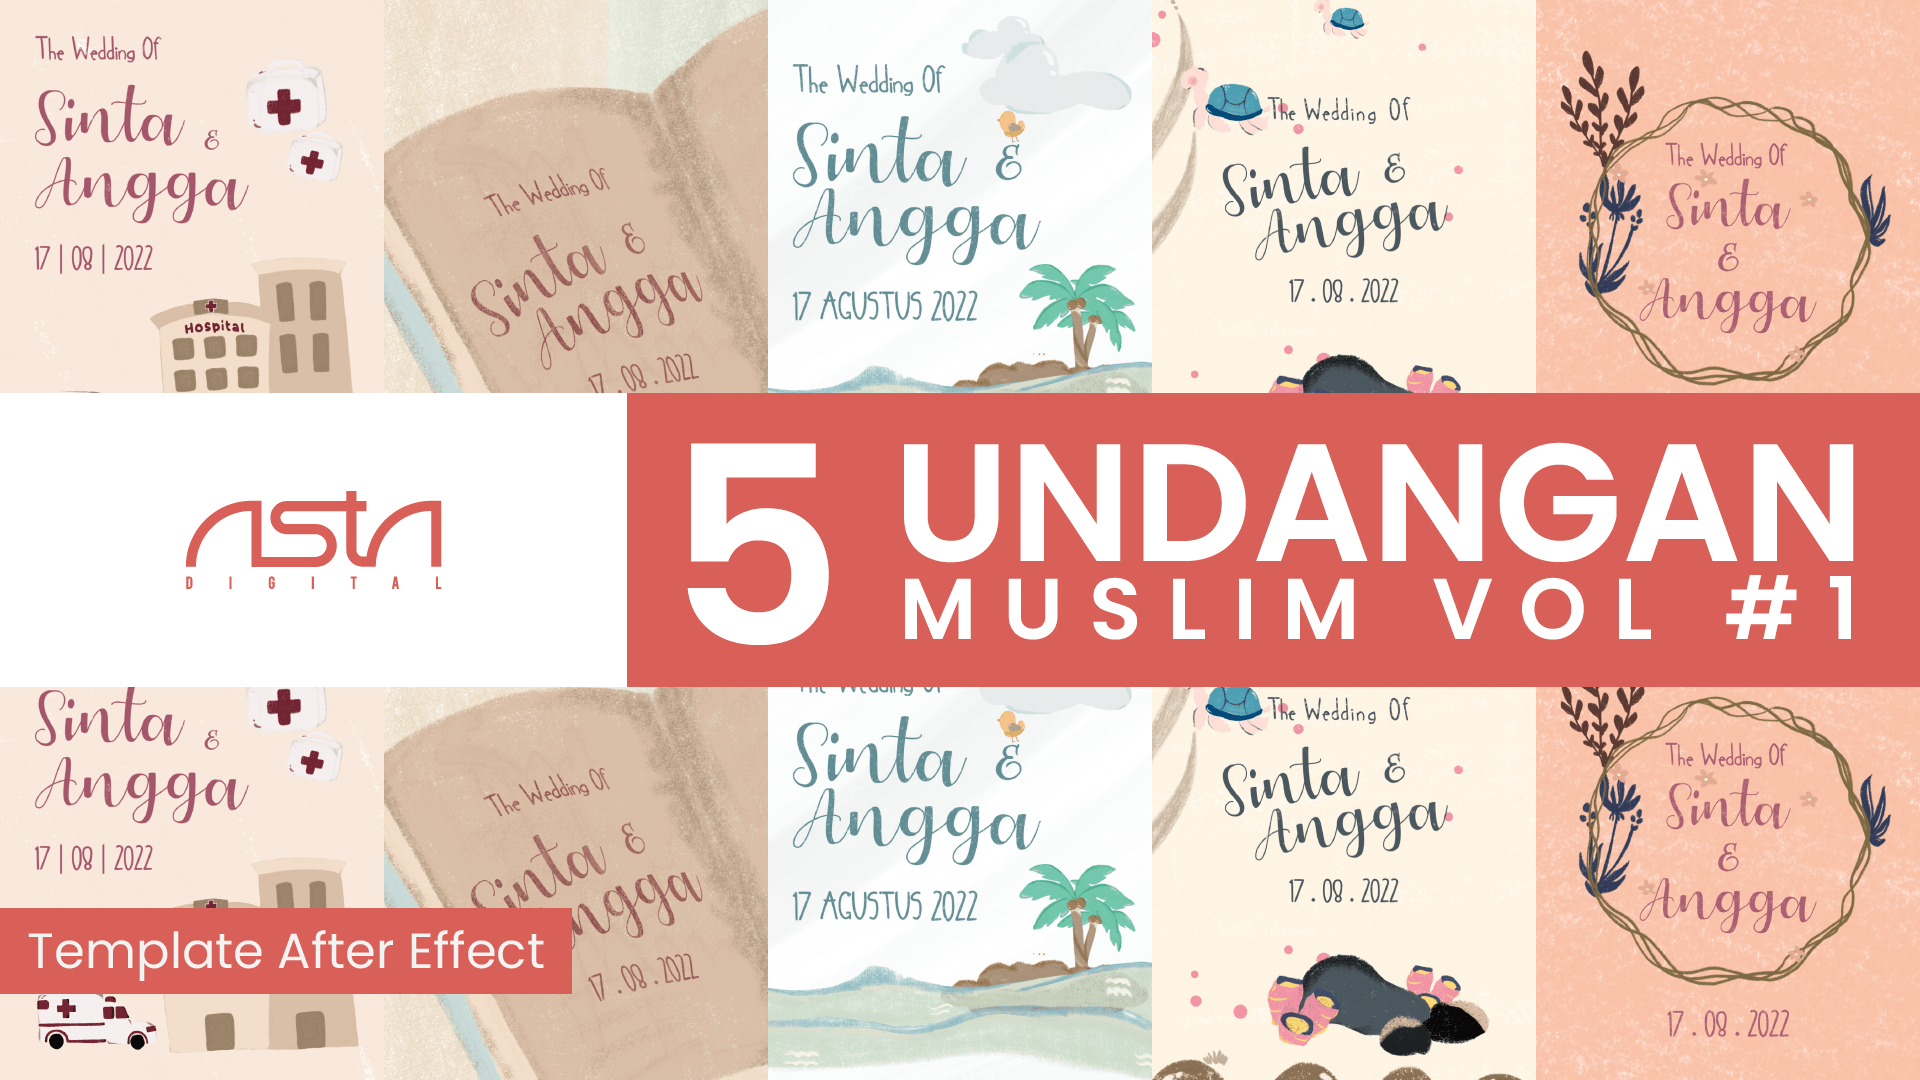 Template 5 Undangan Muslim Vol #1